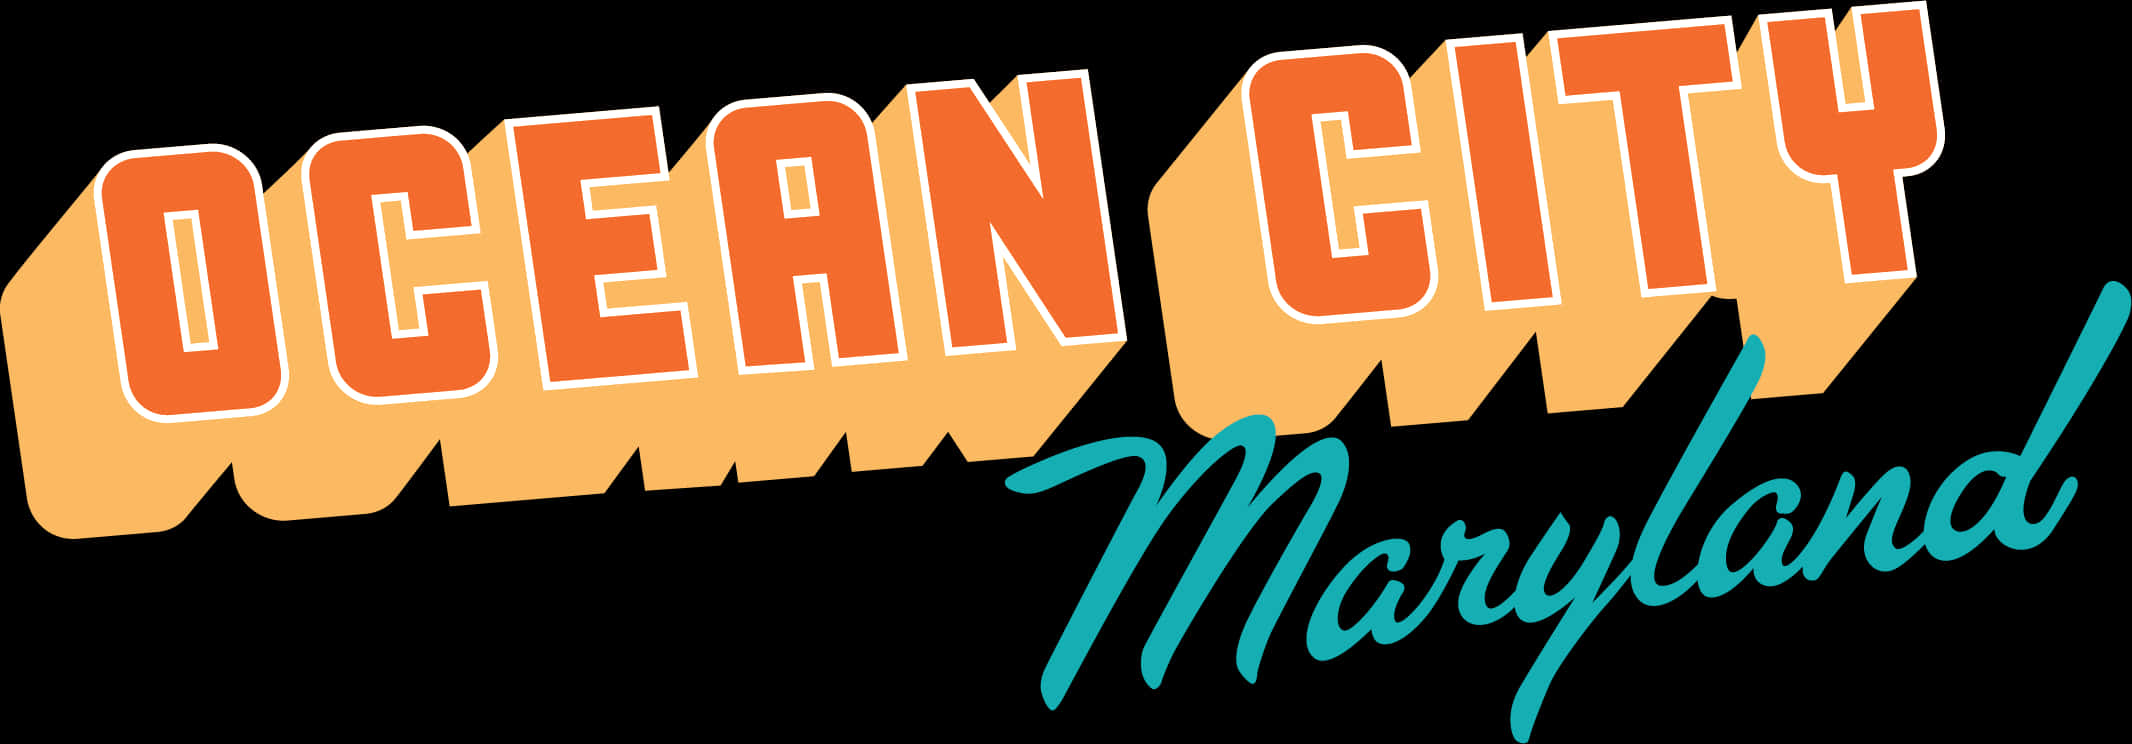 Ocean City Maryland Logo